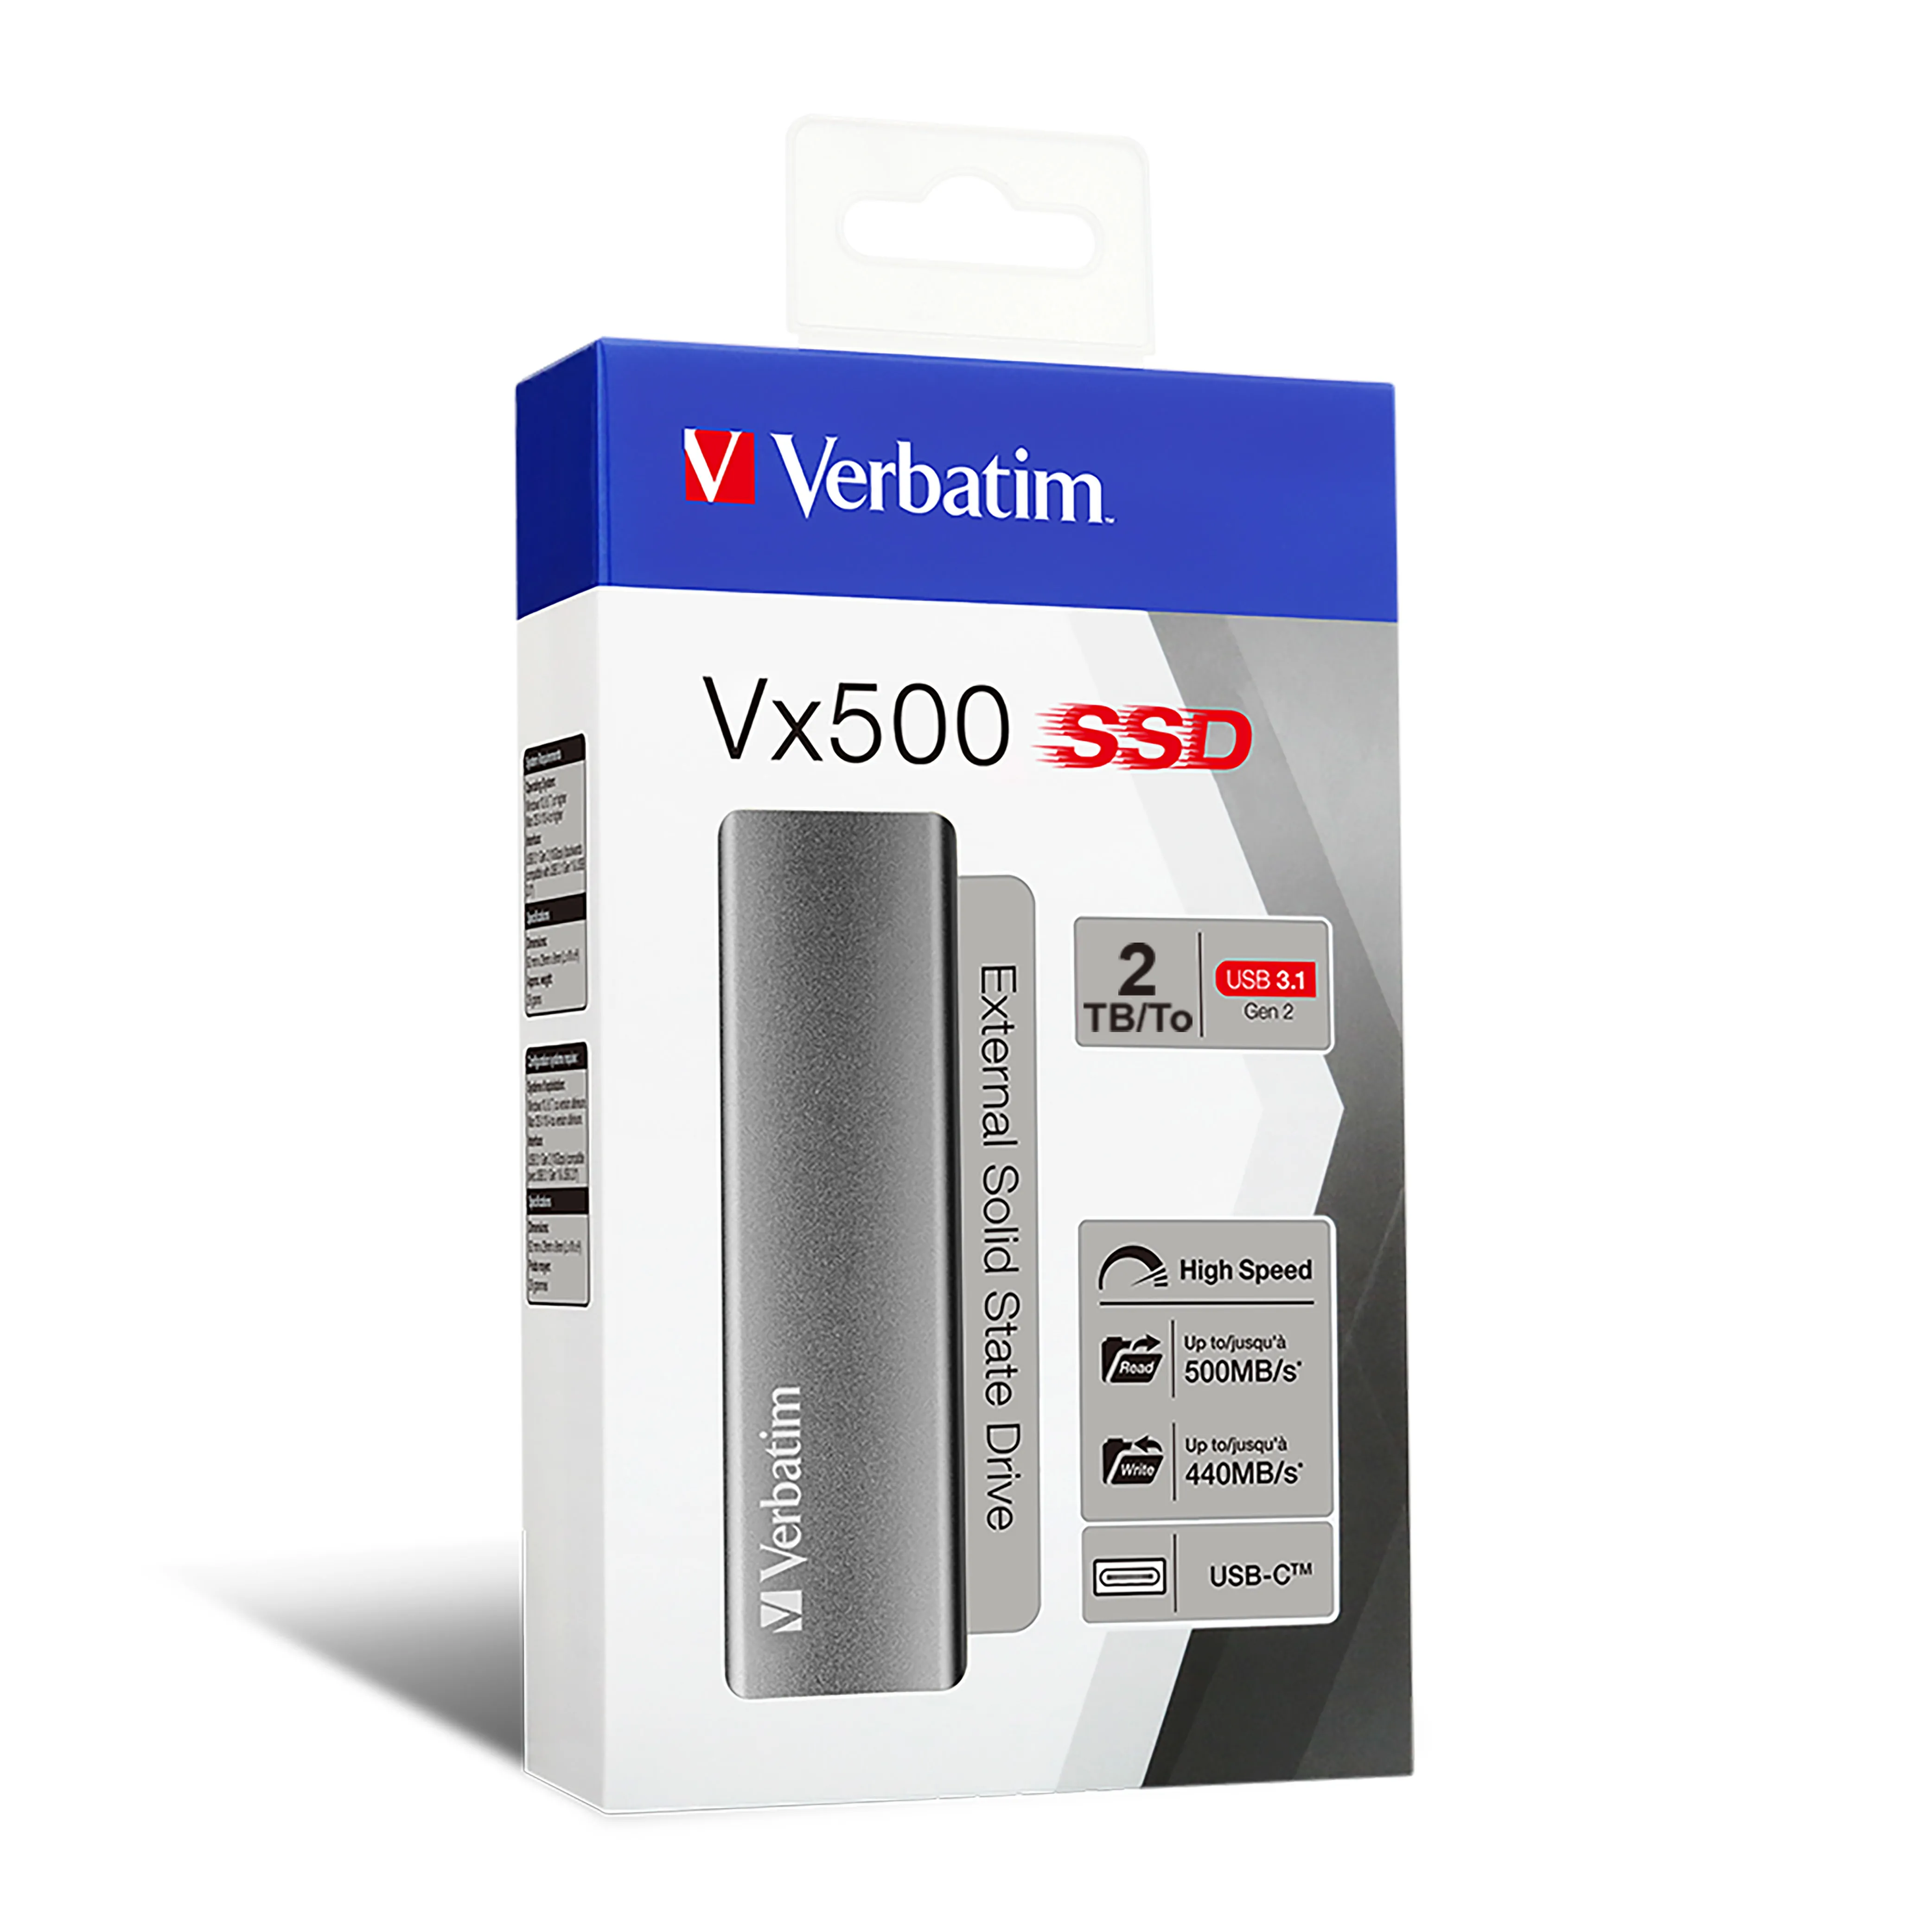 Vente Verbatim Vx500 Verbatim au meilleur prix - visuel 2